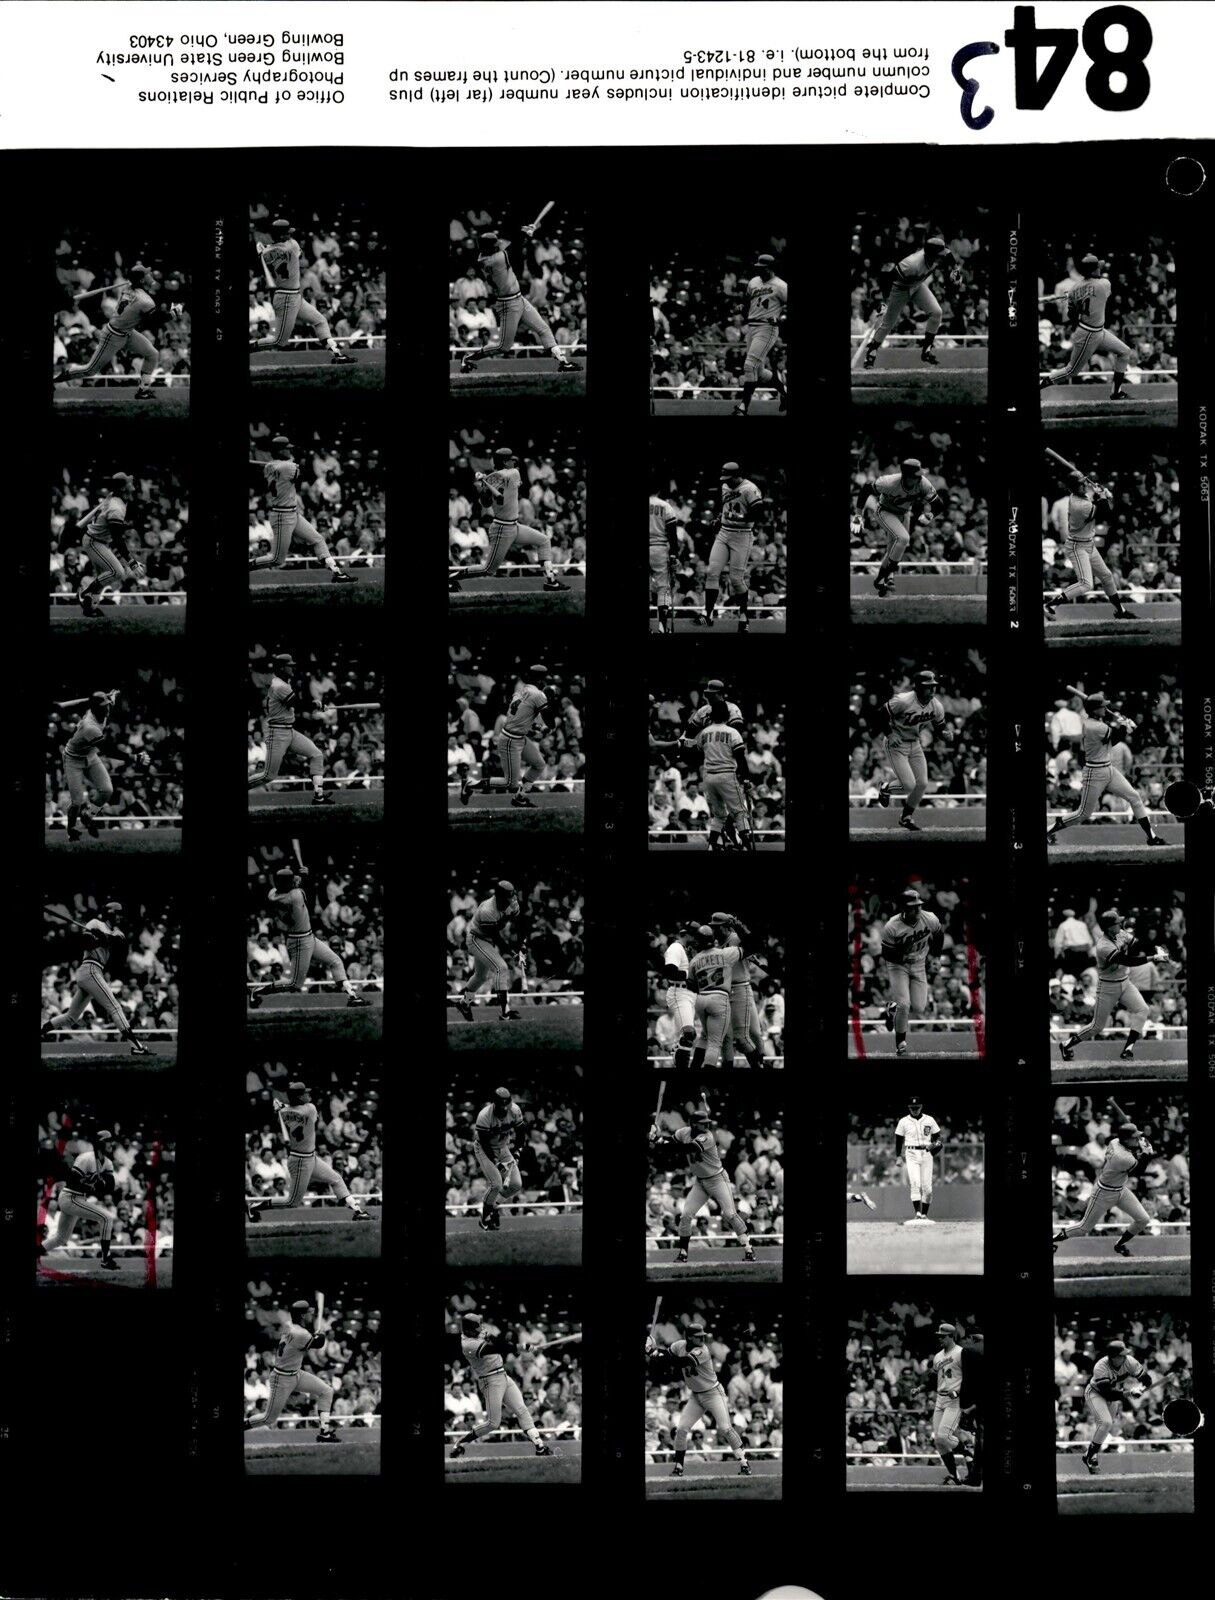 LD345 1985 Orig Contact Sheet Photo DETROIT TIGERS - MINNESOTA TWINS BASEBALL